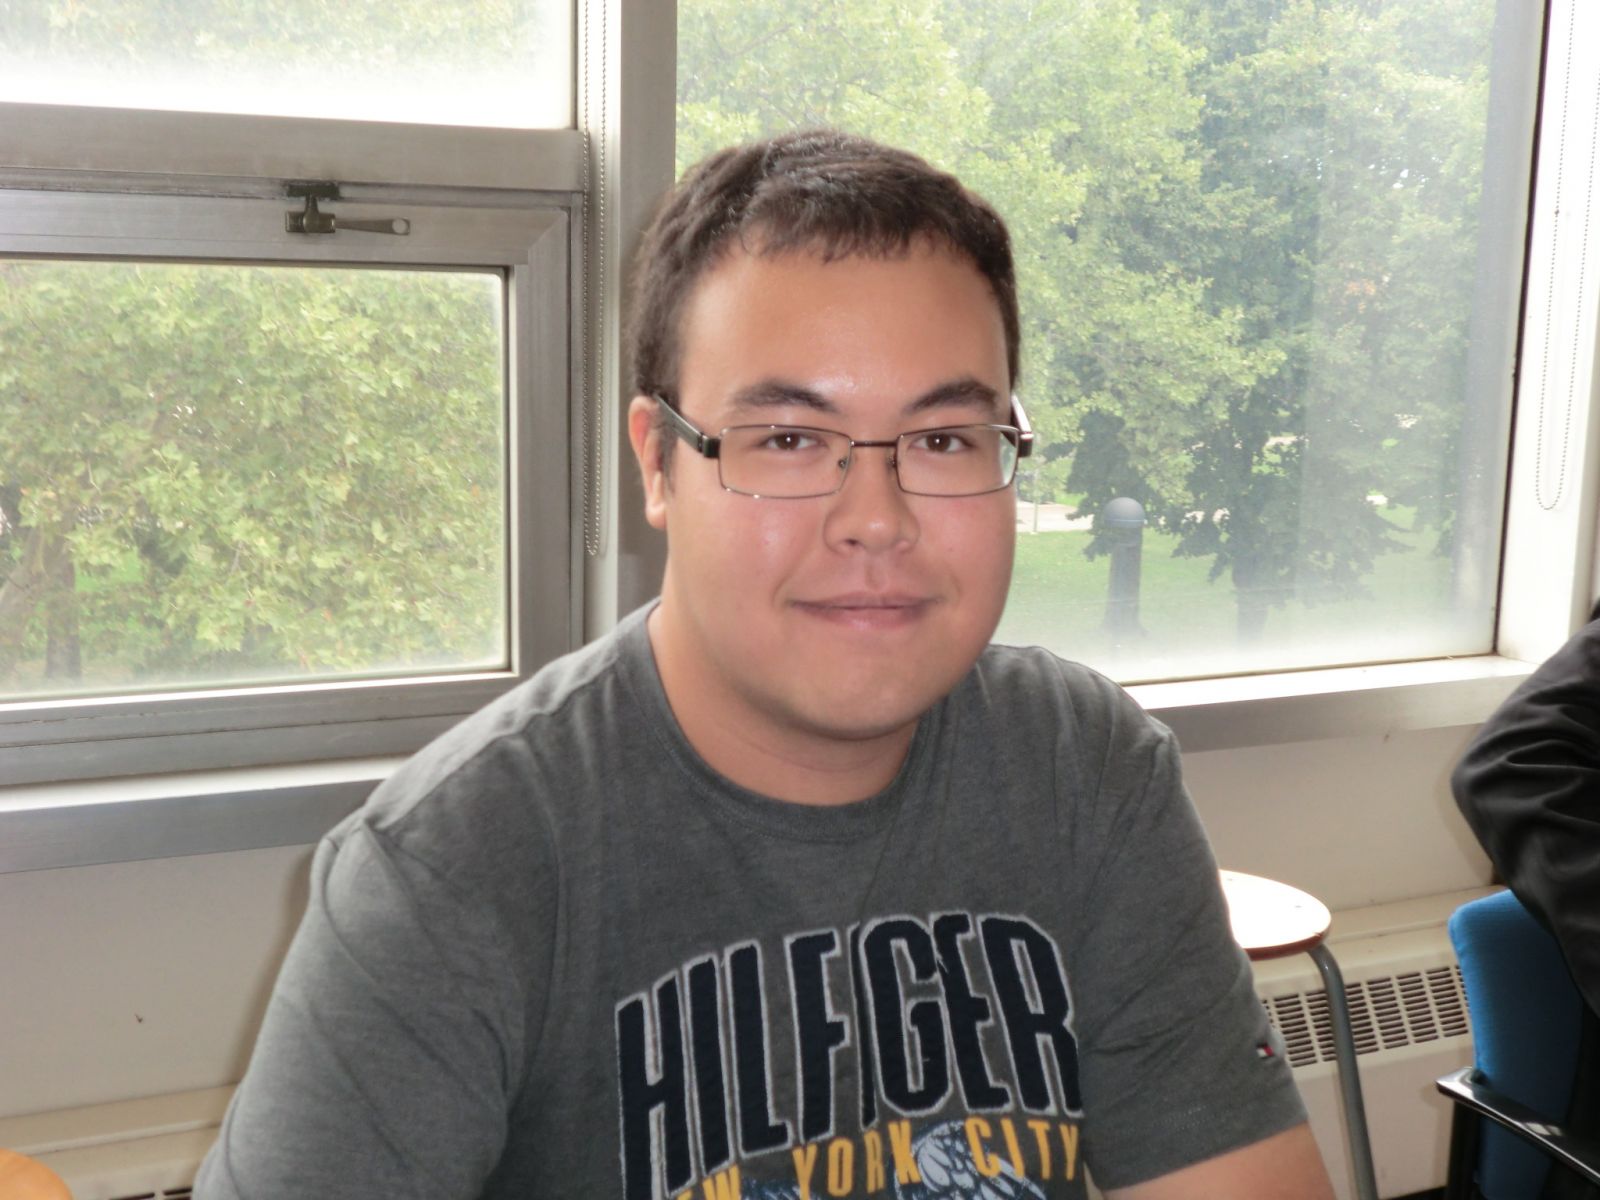 Student Cyrus Cerkauskas